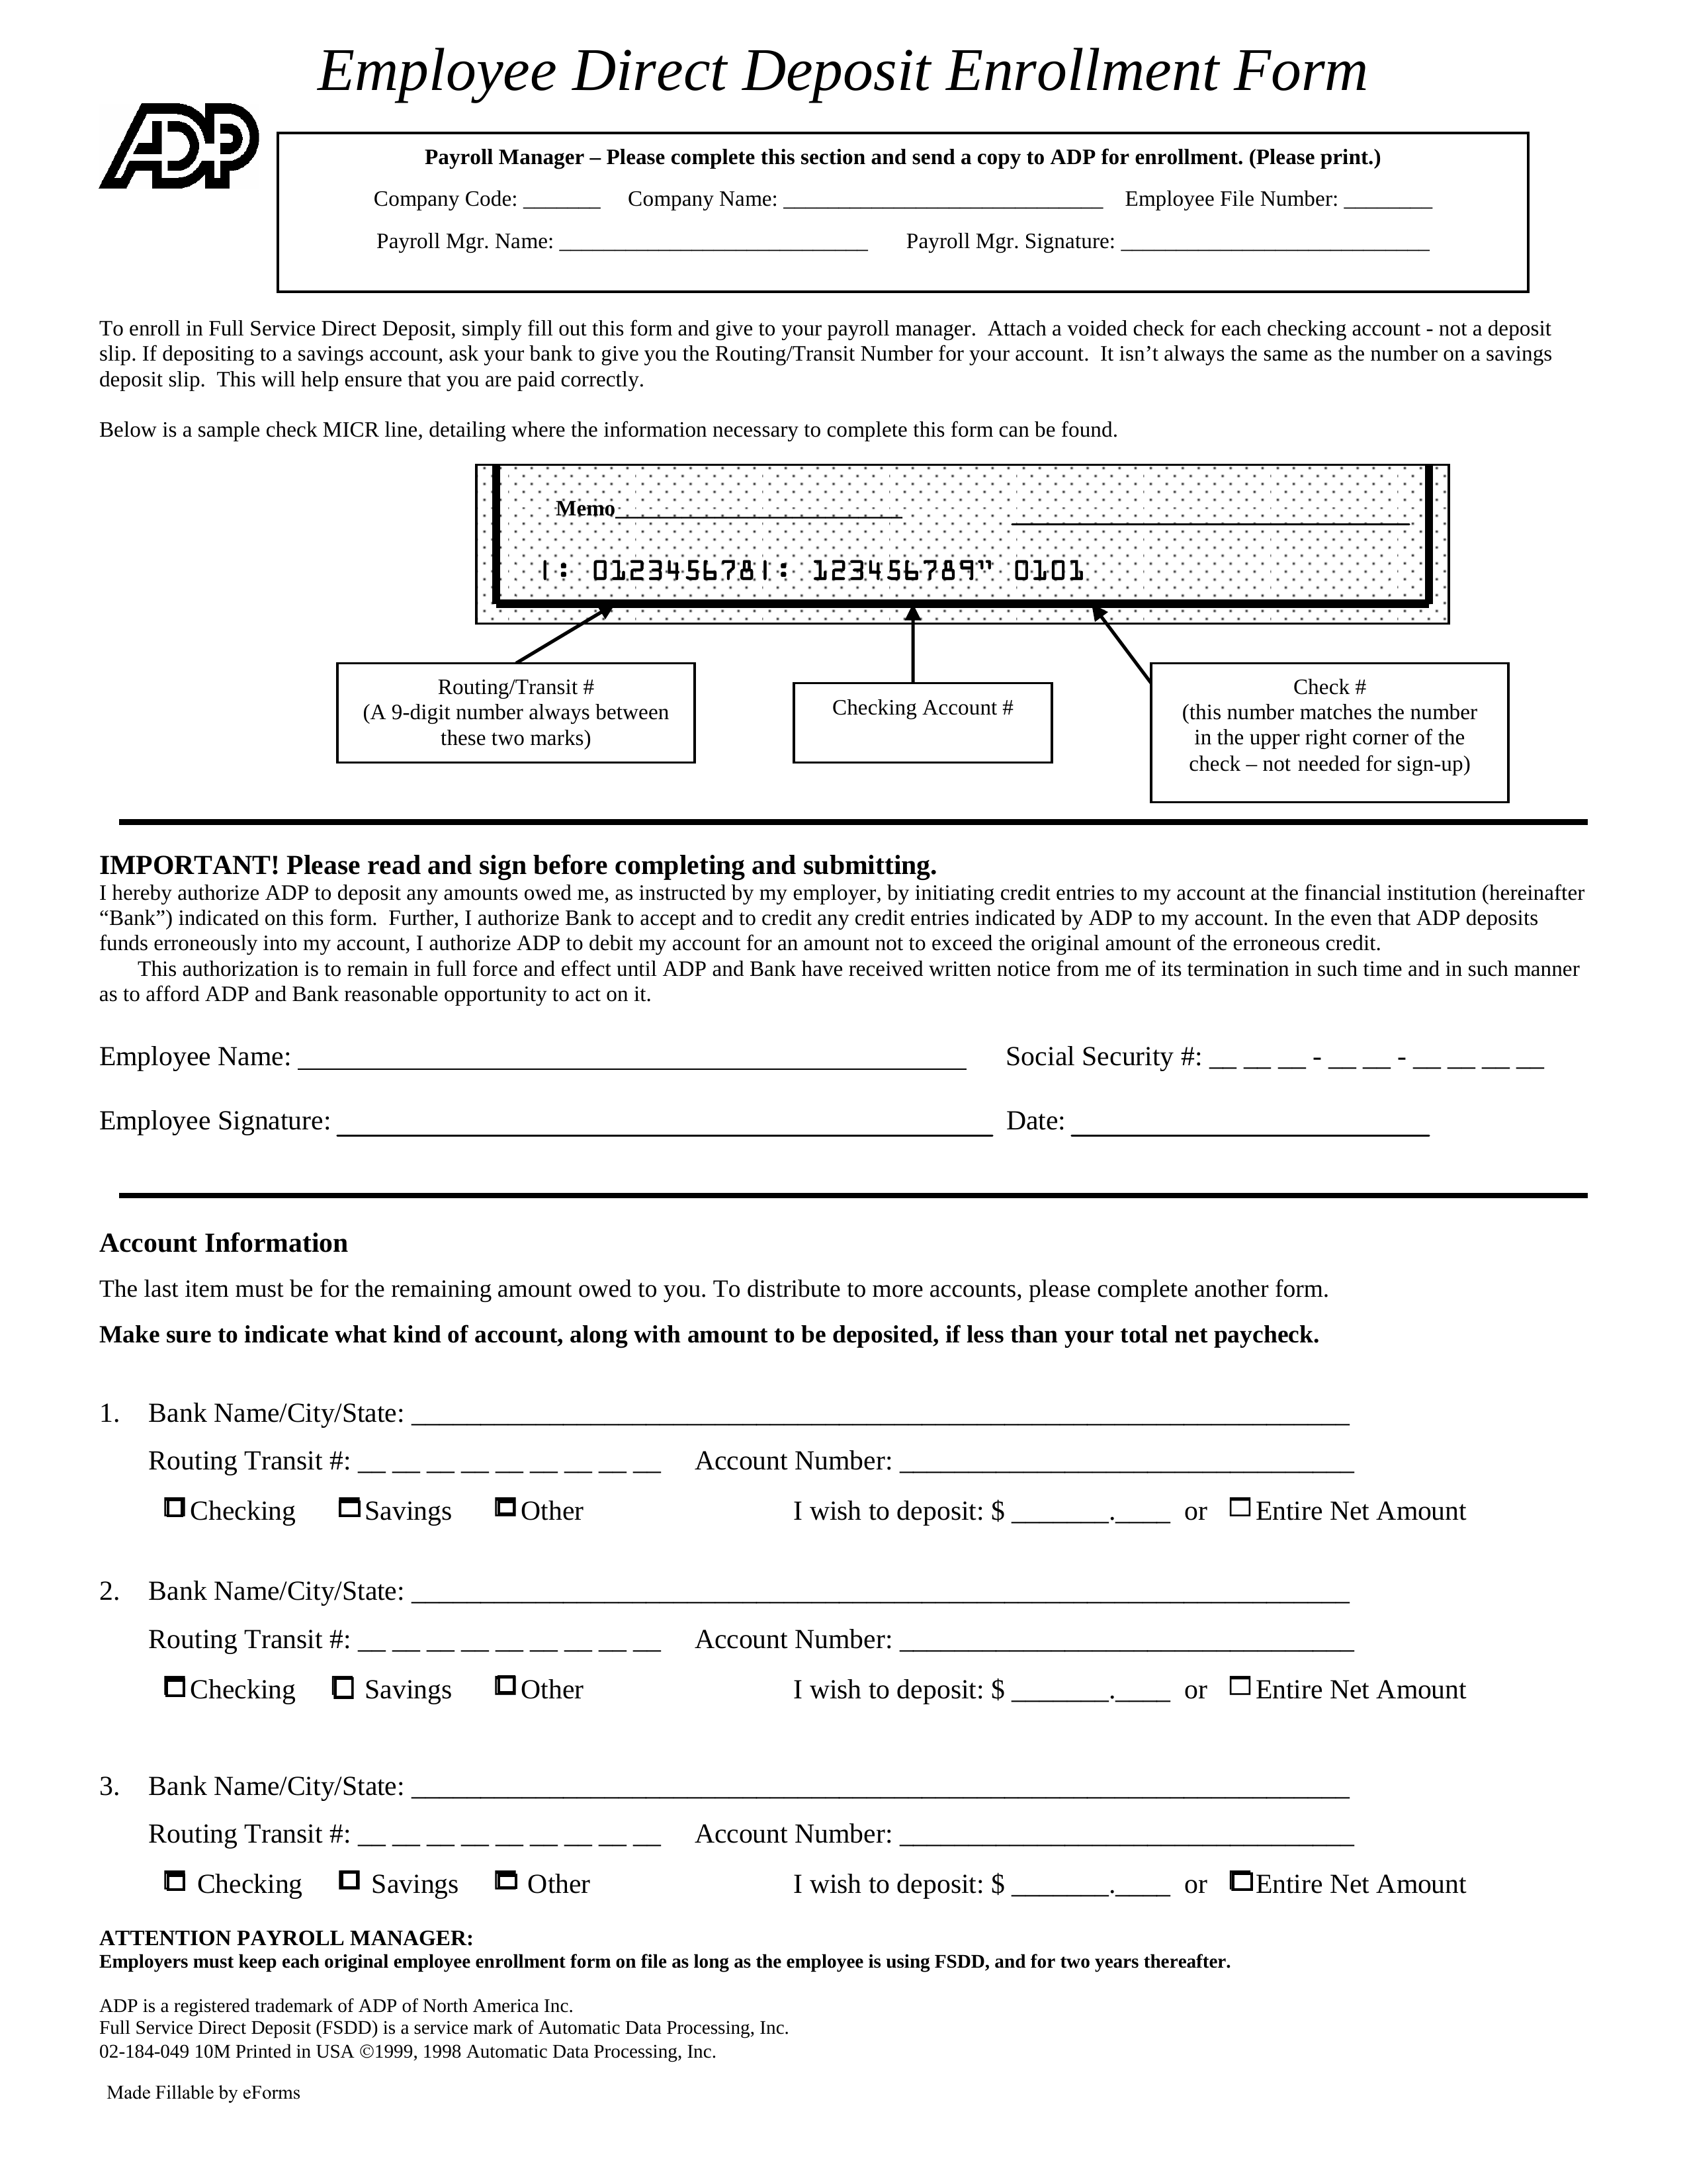 Free ADP Direct Deposit Authorization Form – PDF – EForms Inside Employee Direct Deposit Enrollment Form Template